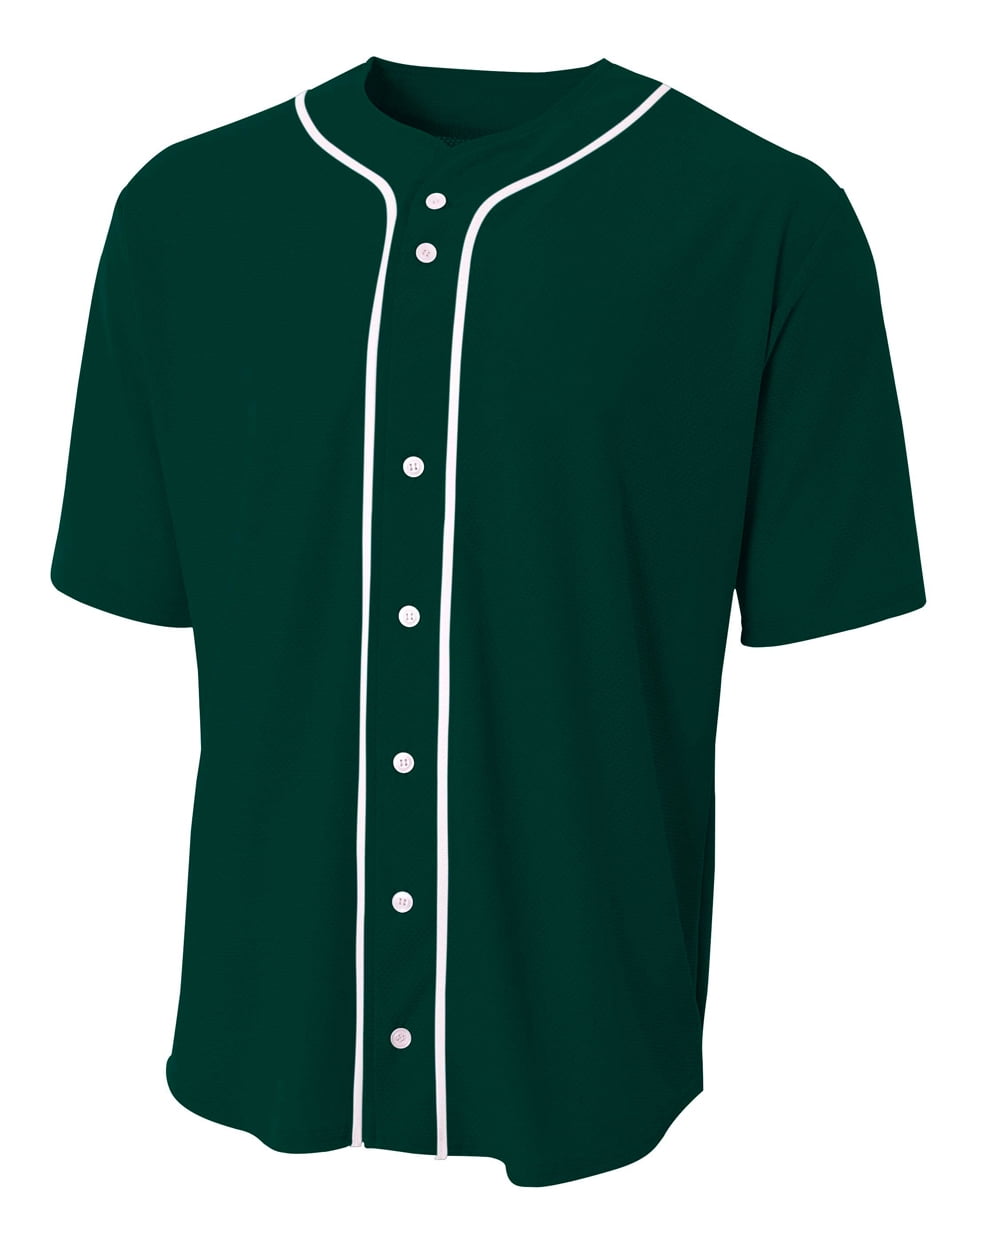 Native Princess Full-Button Baseball Jersey 4T